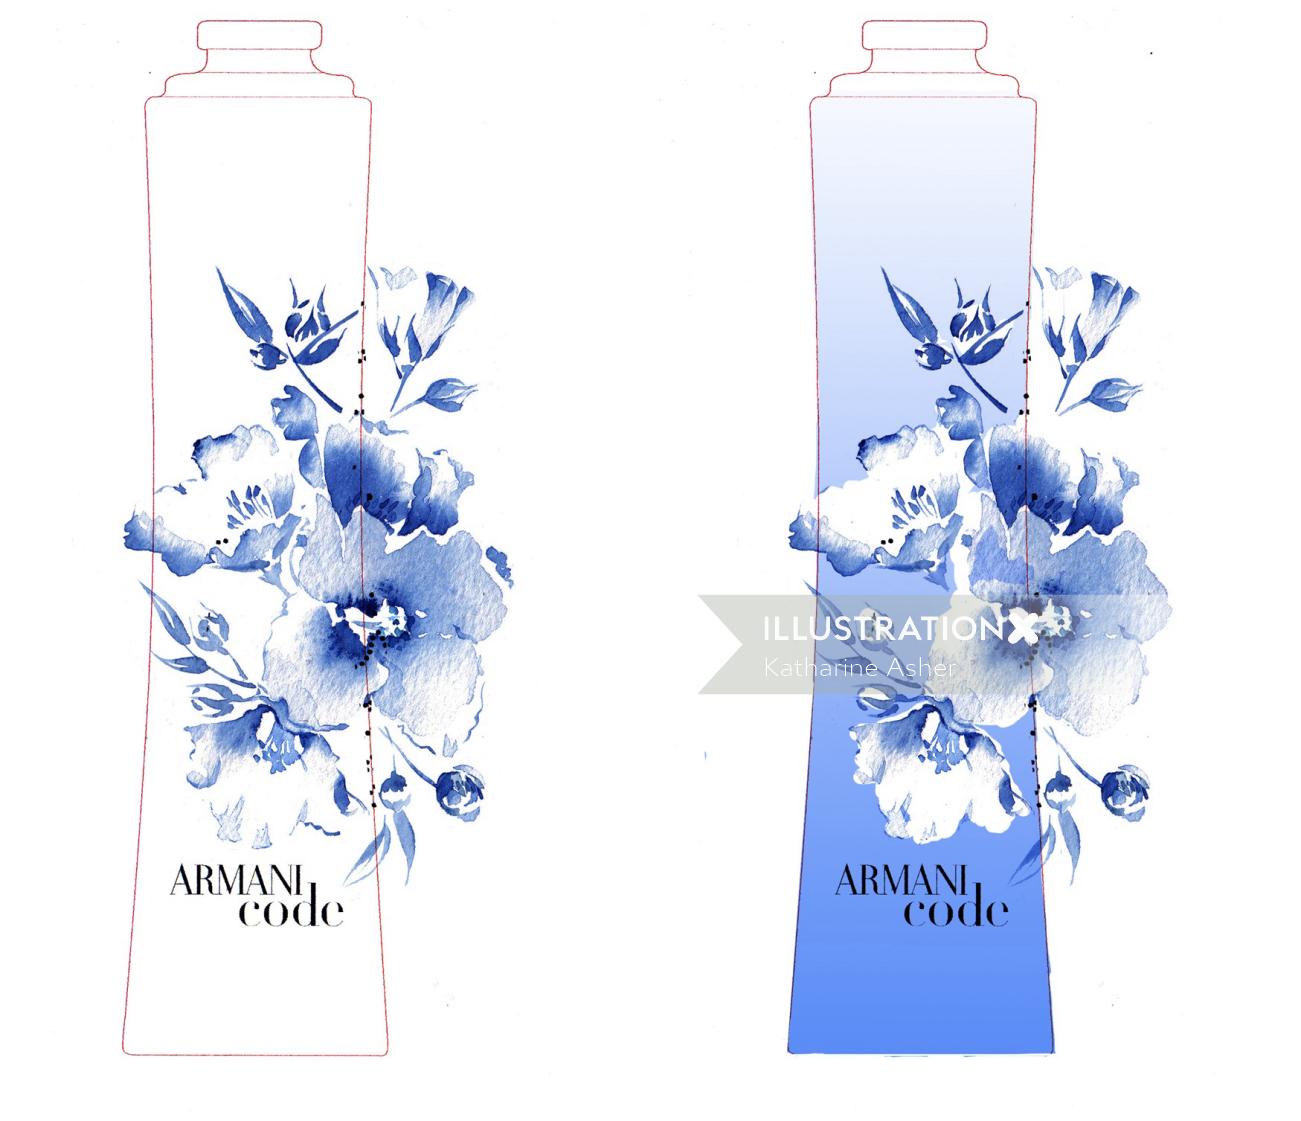 Illustration des parfums Armani par Katharine Asher